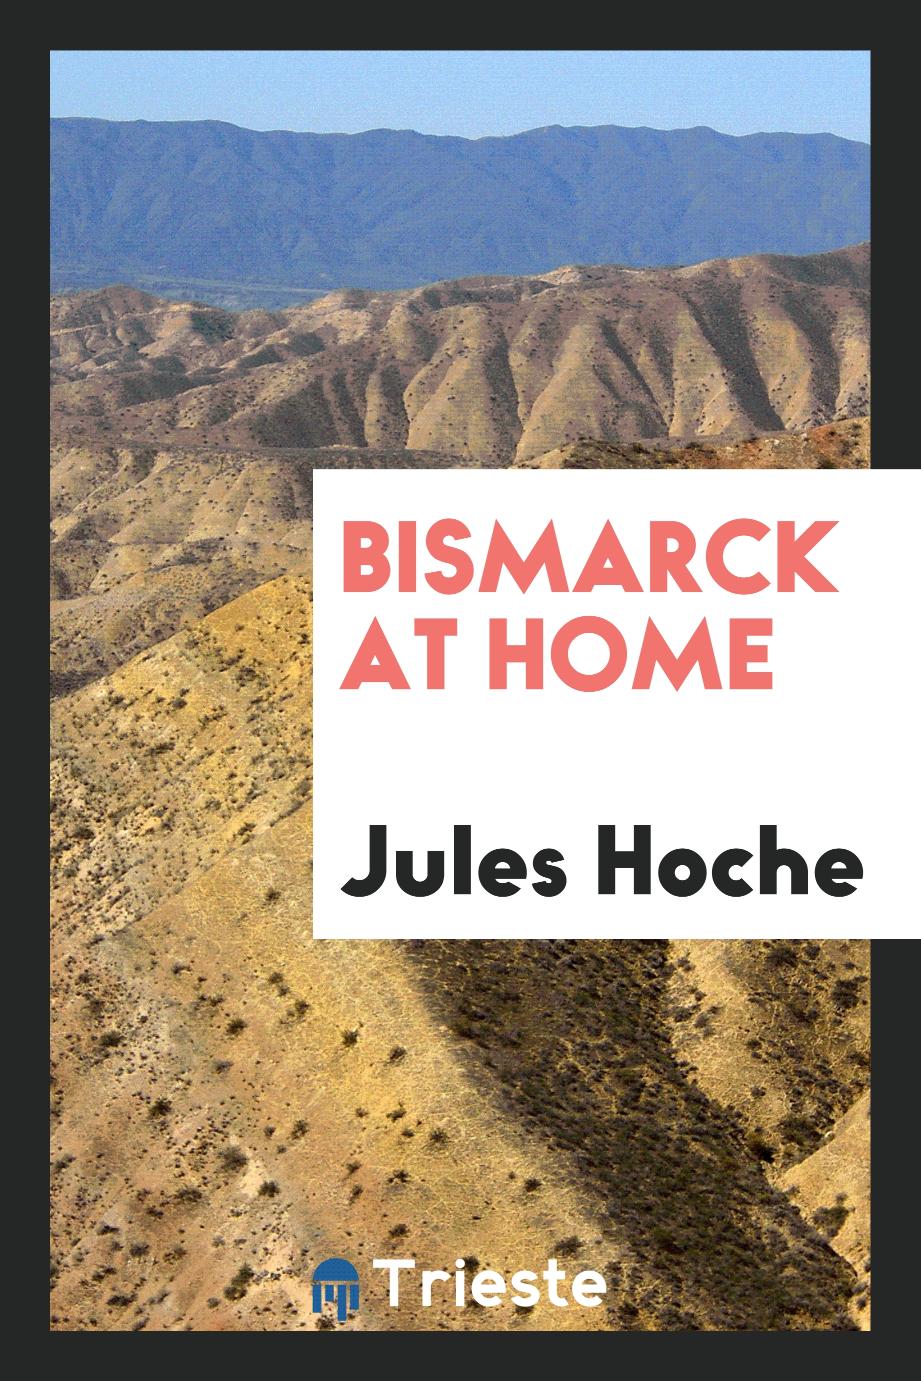 Bismarck at home